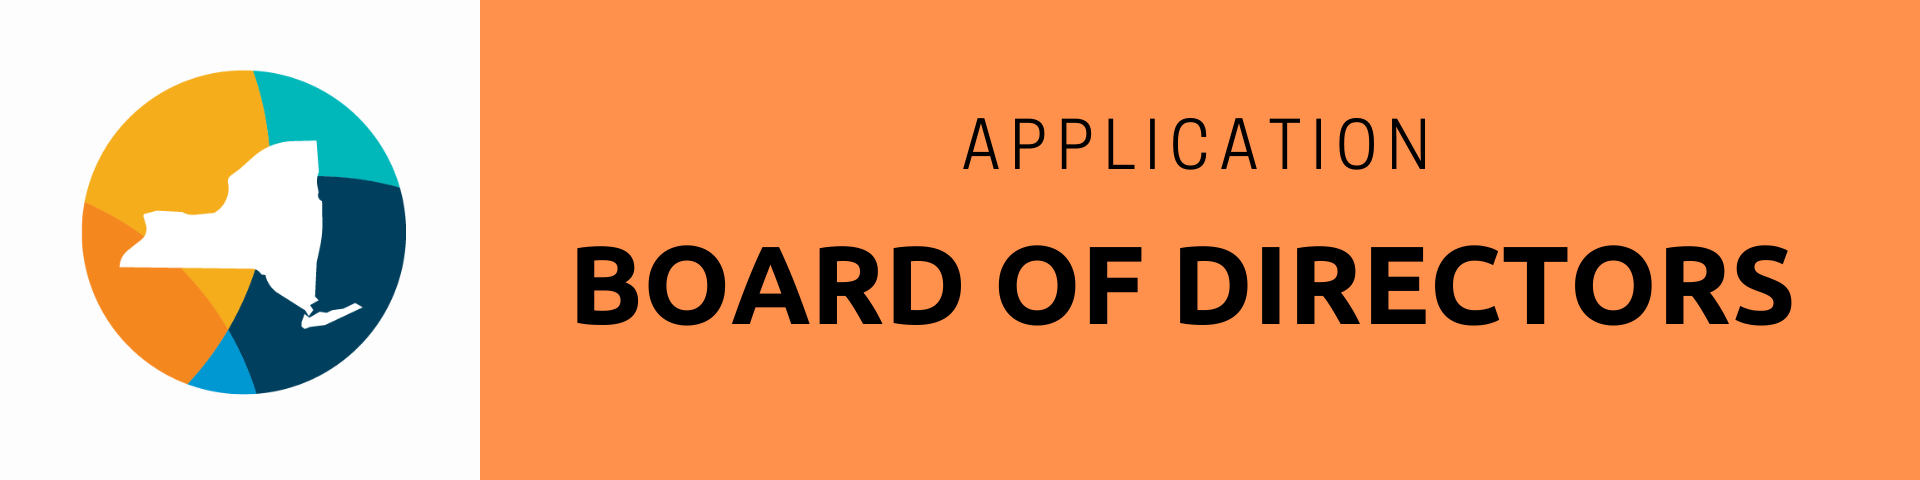 Board of Director Application